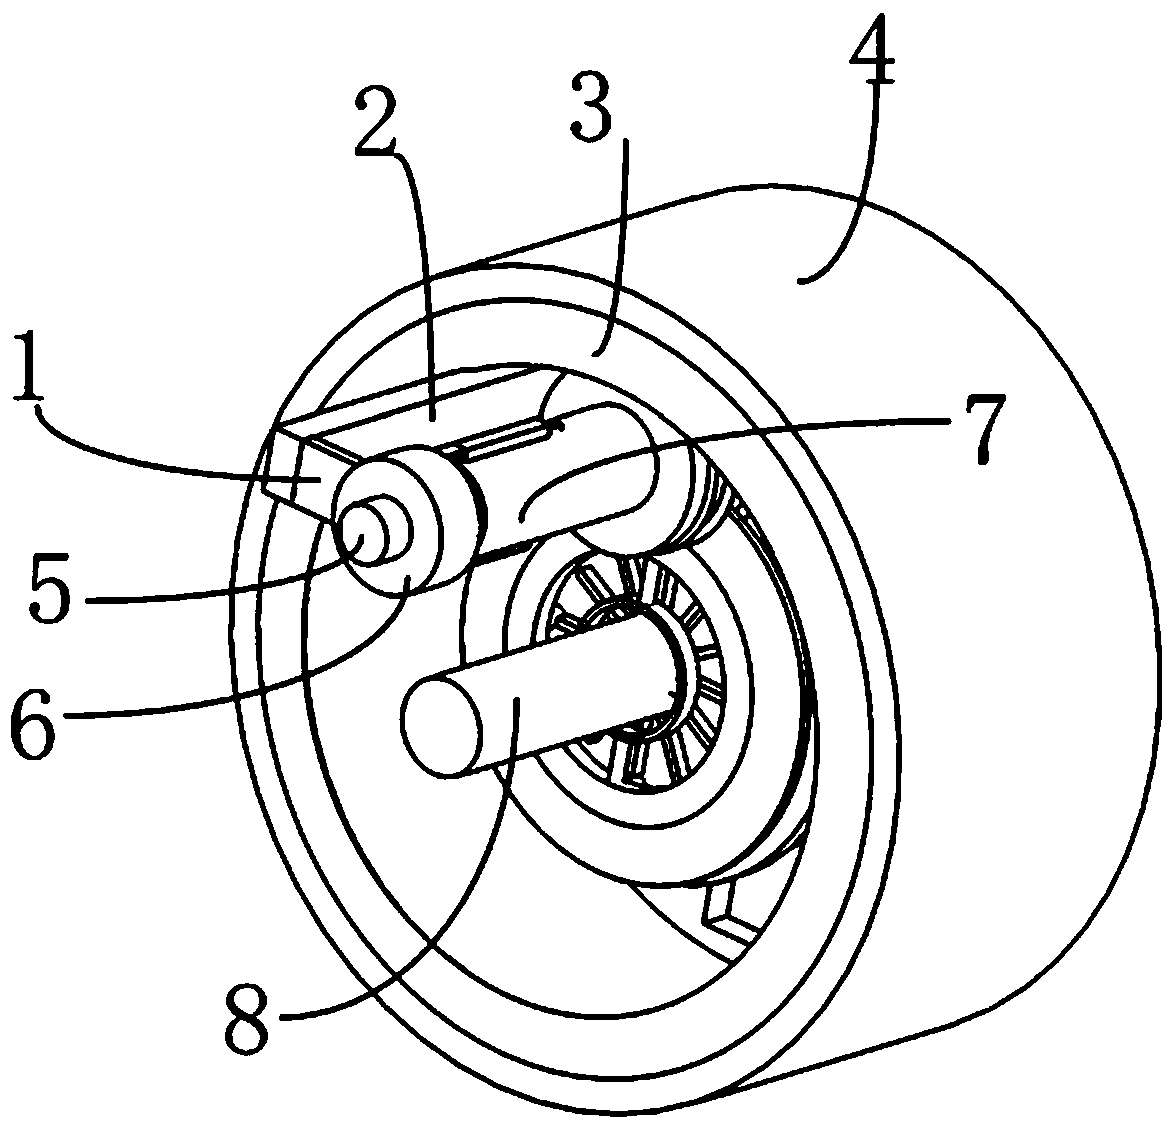 Adjustable braking mechanism based on spiral piece